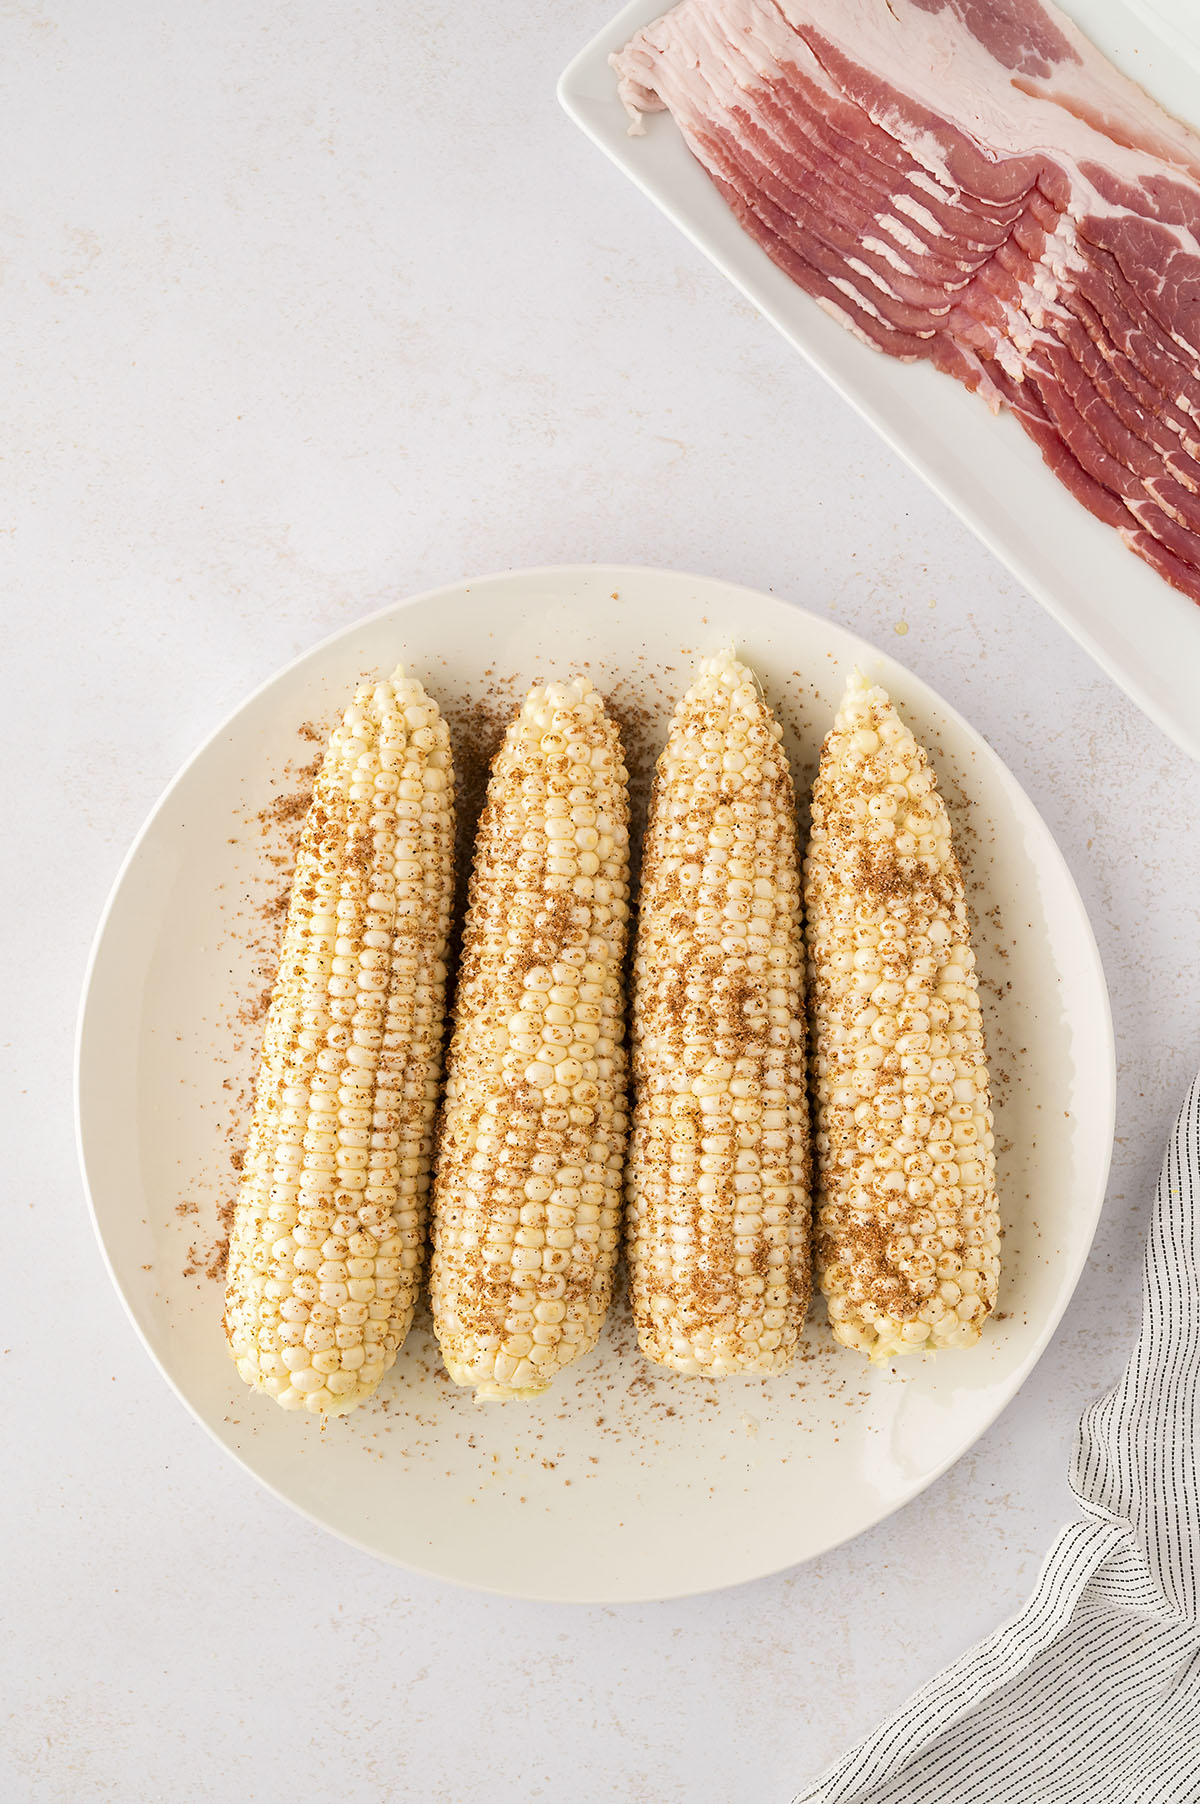 Four seasoned corn cobs on a white plate.